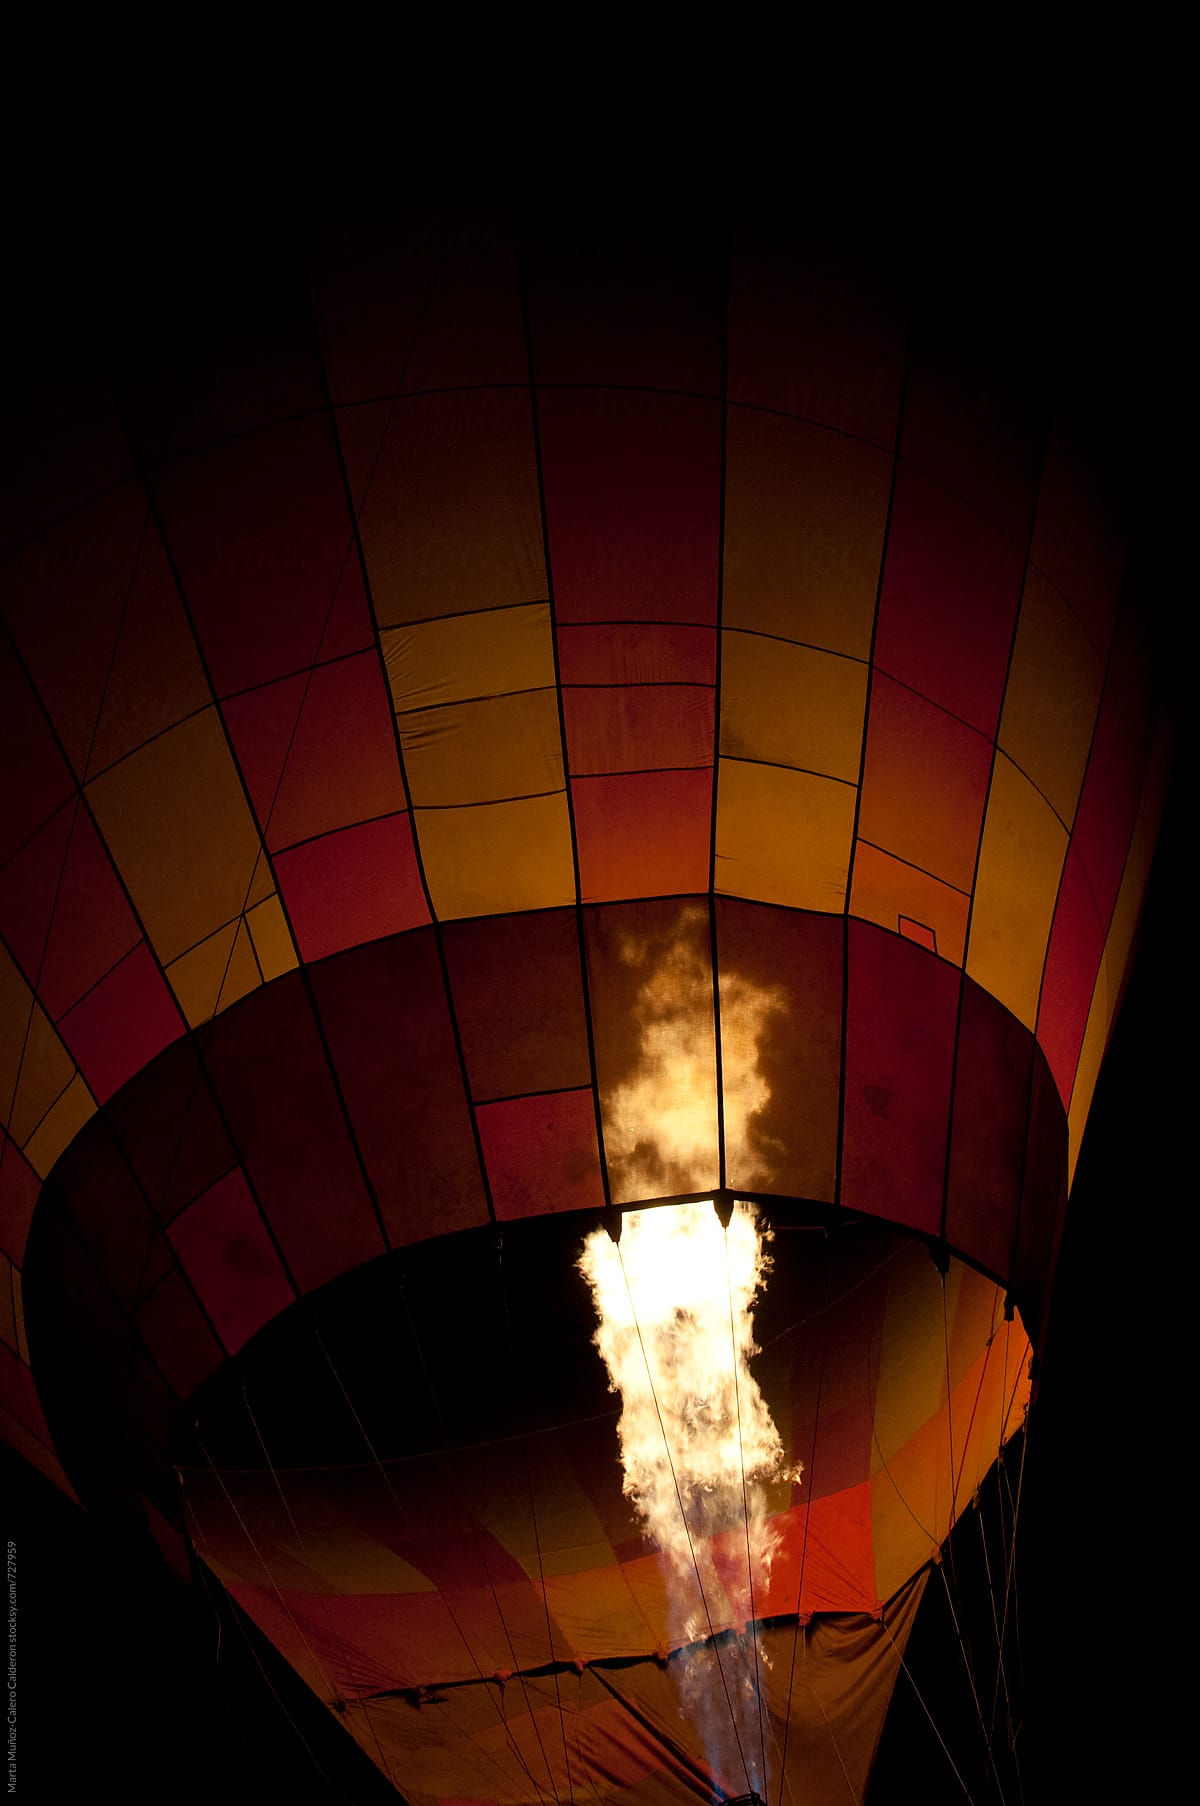 Flames Burst Out in a Hot Air Balloon